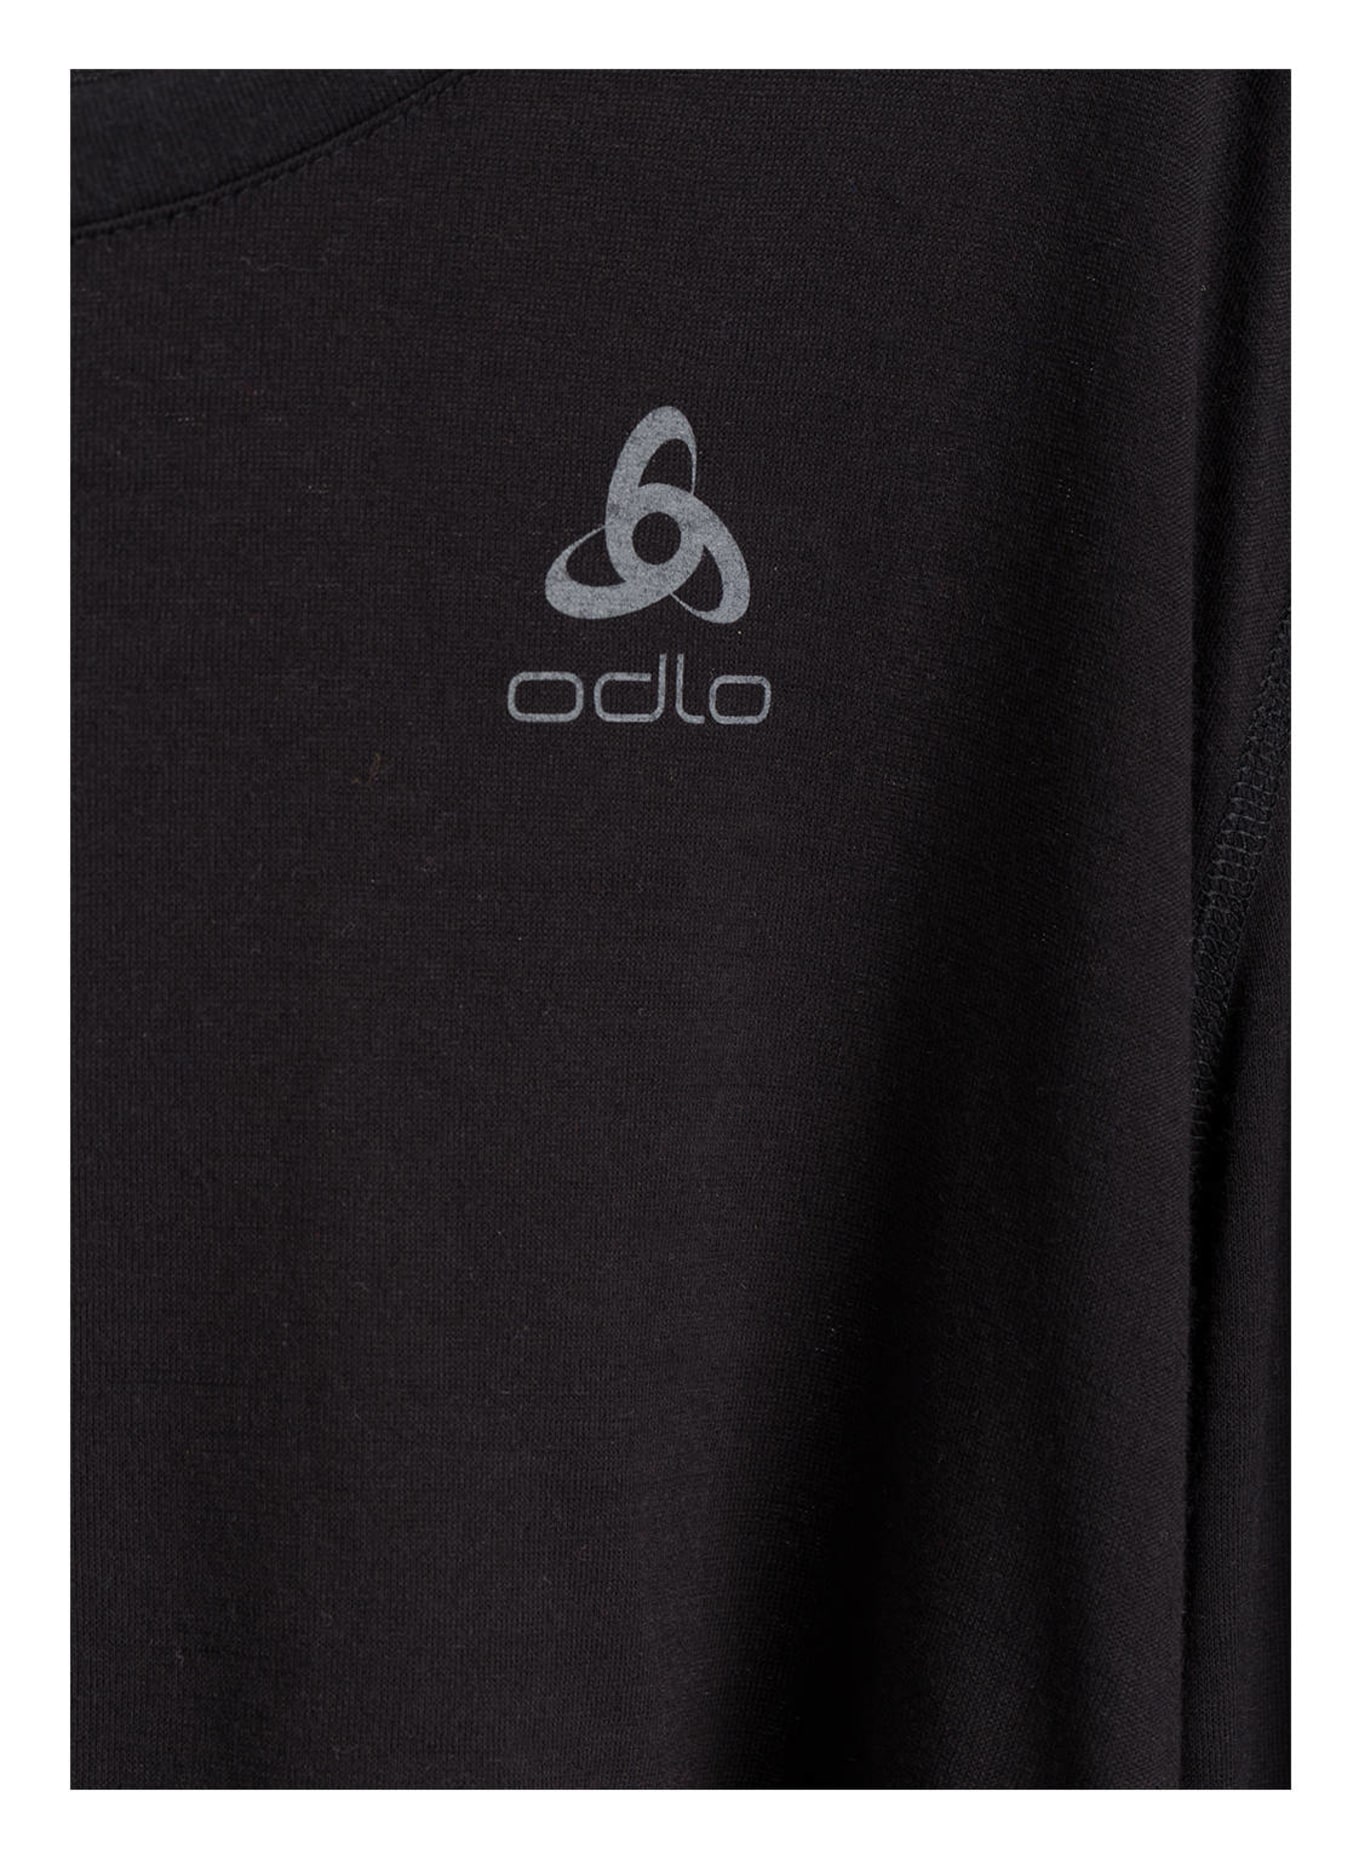 odlo Functional underwear shirt NATURAL WARM made of merino wool, Color: BLACK (Image 4)